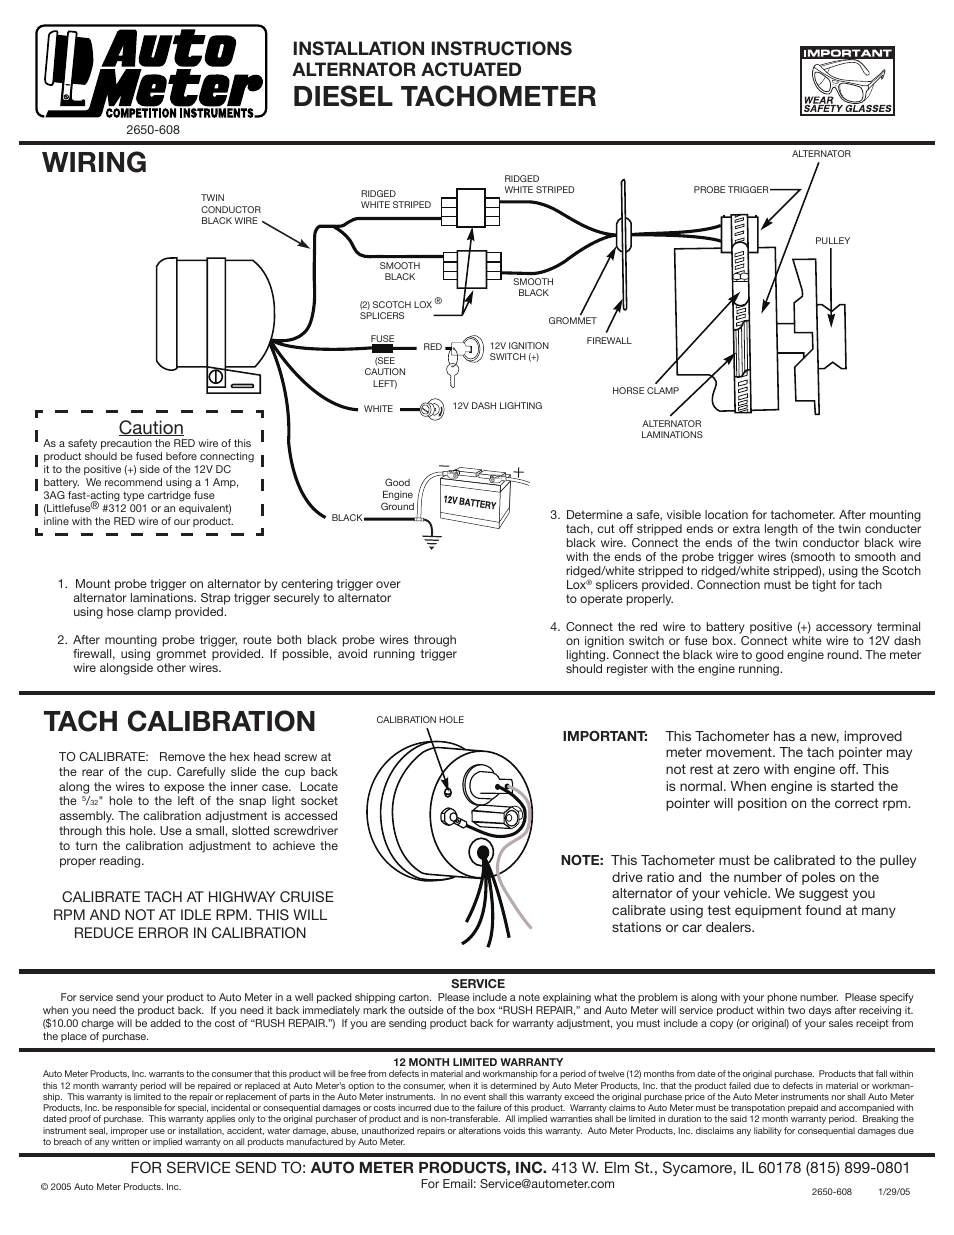 Autometer Tach Wiring | Wiring Diagram - Autometer Tach Wiring Diagram